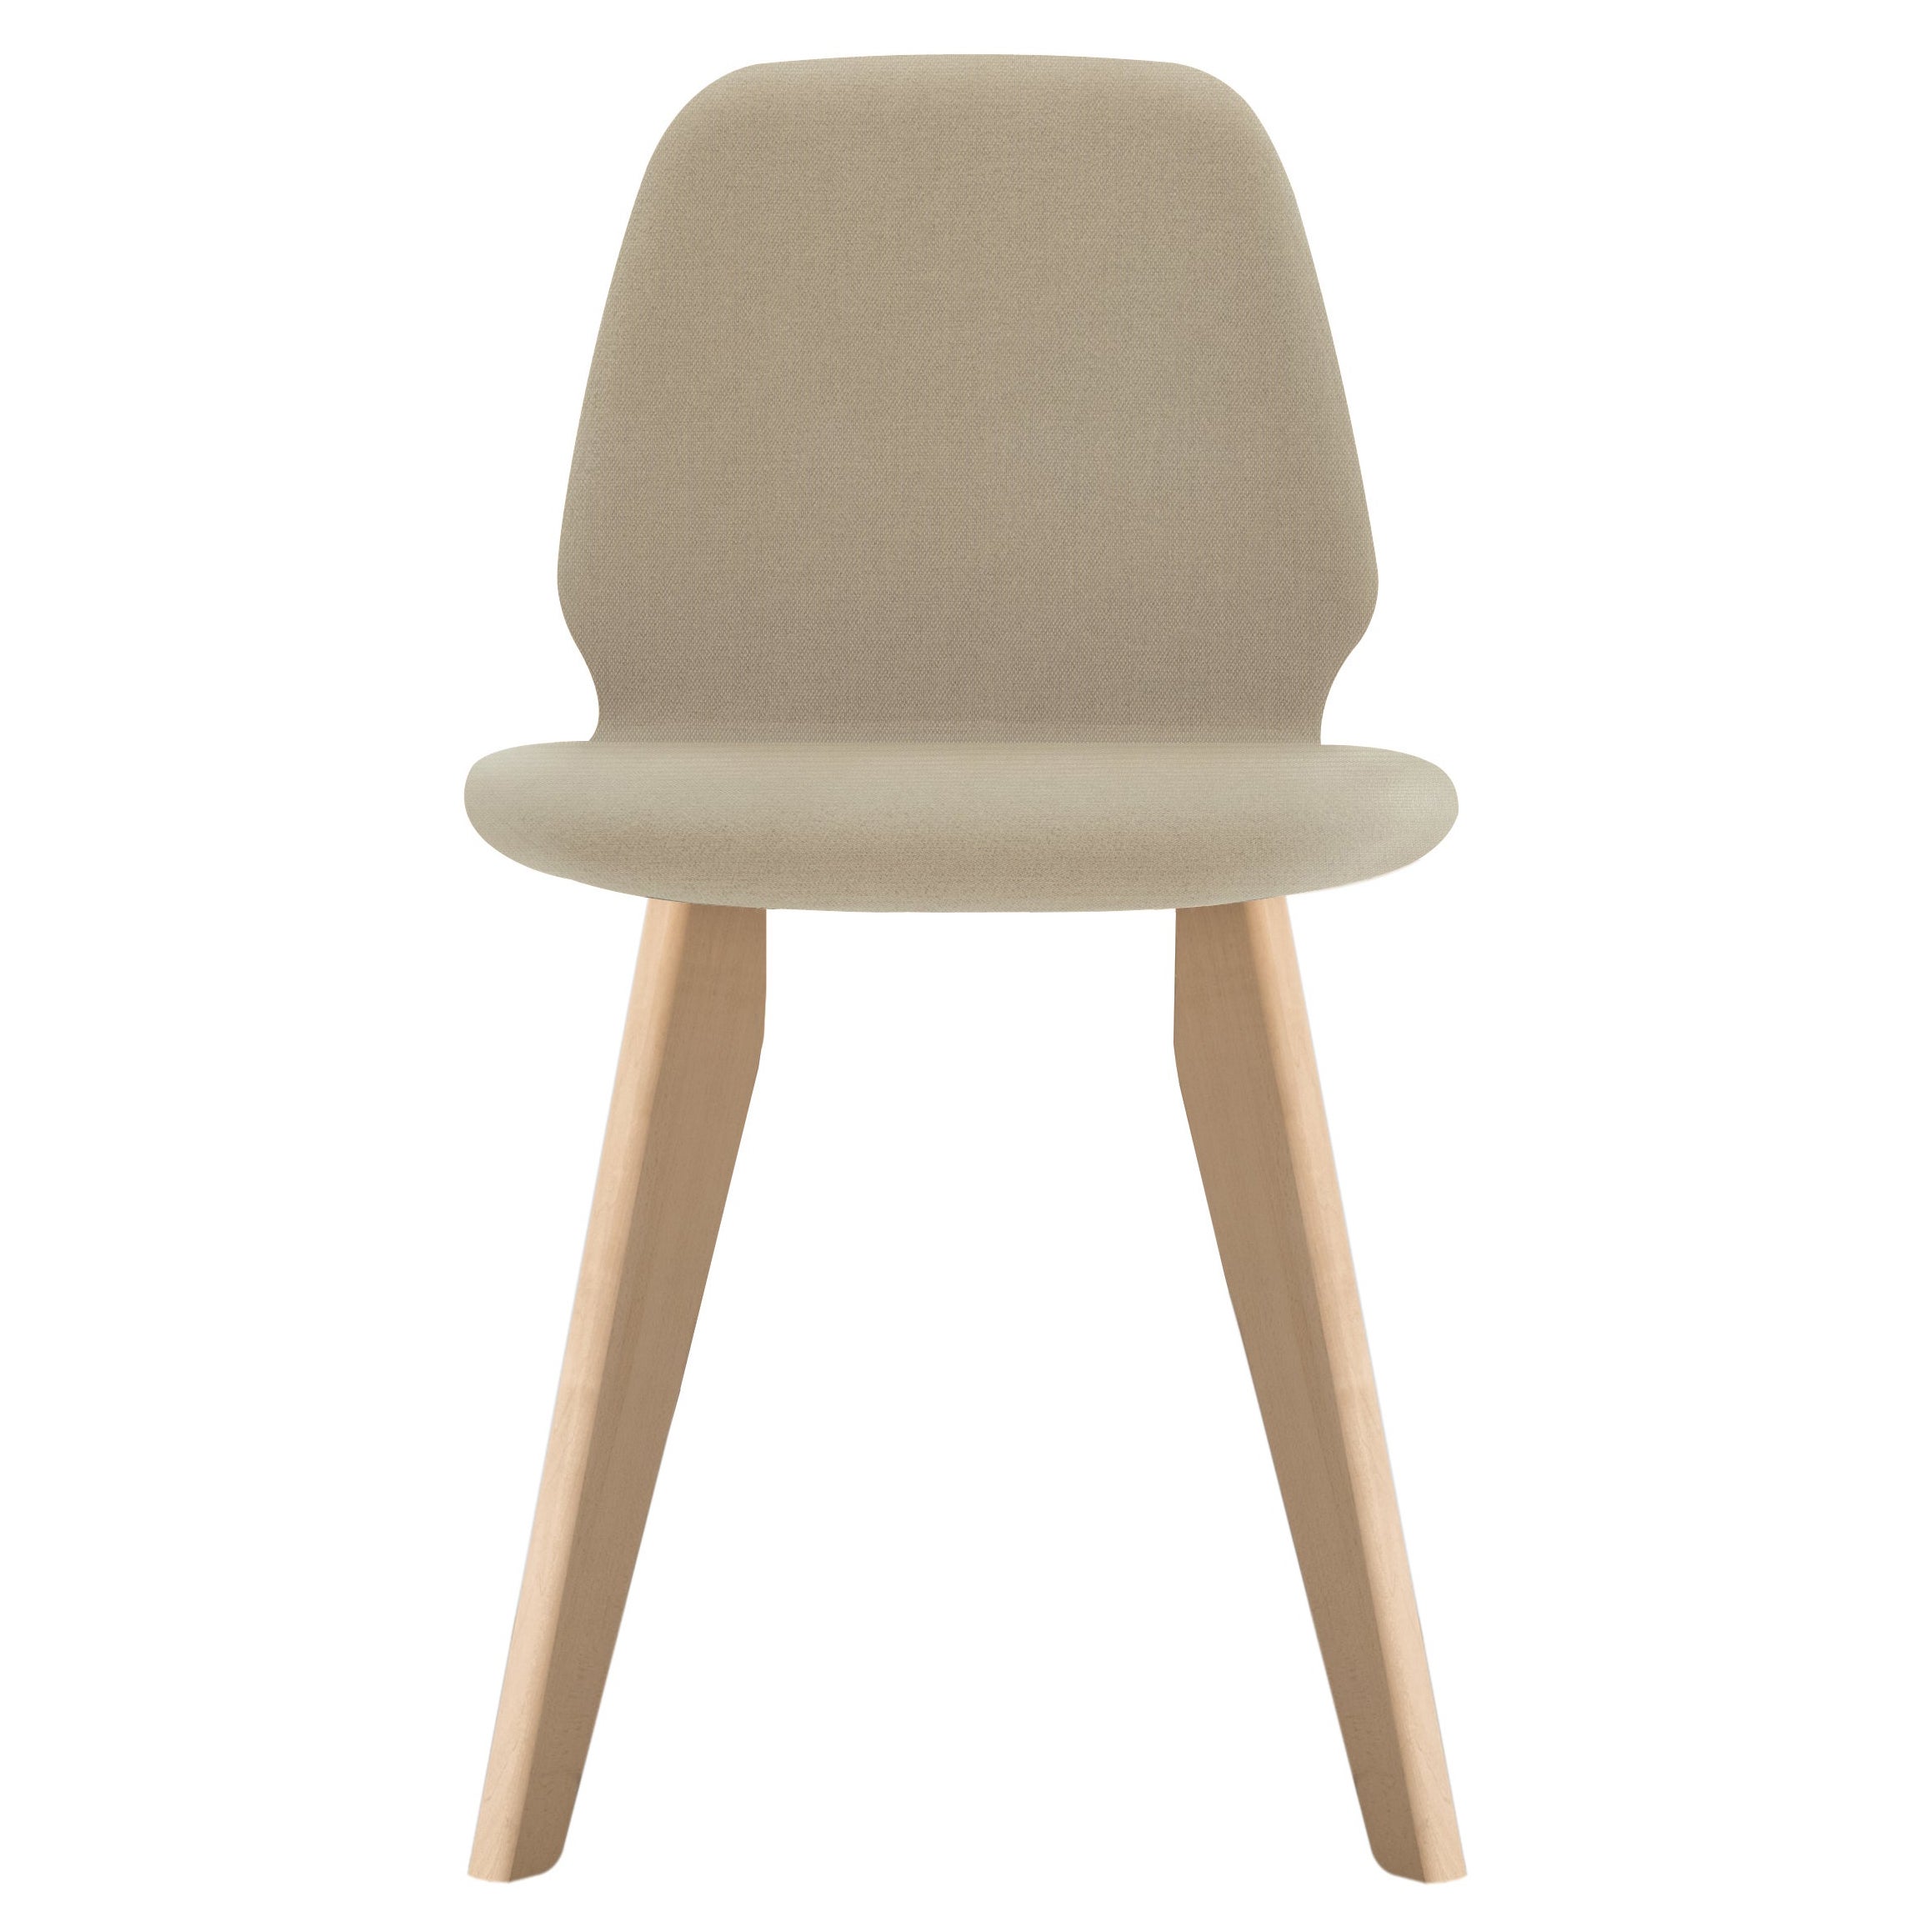 Alias 571 Tindari Wood Chair in Beige Seat with Oak Frame by Alfredo Häberli